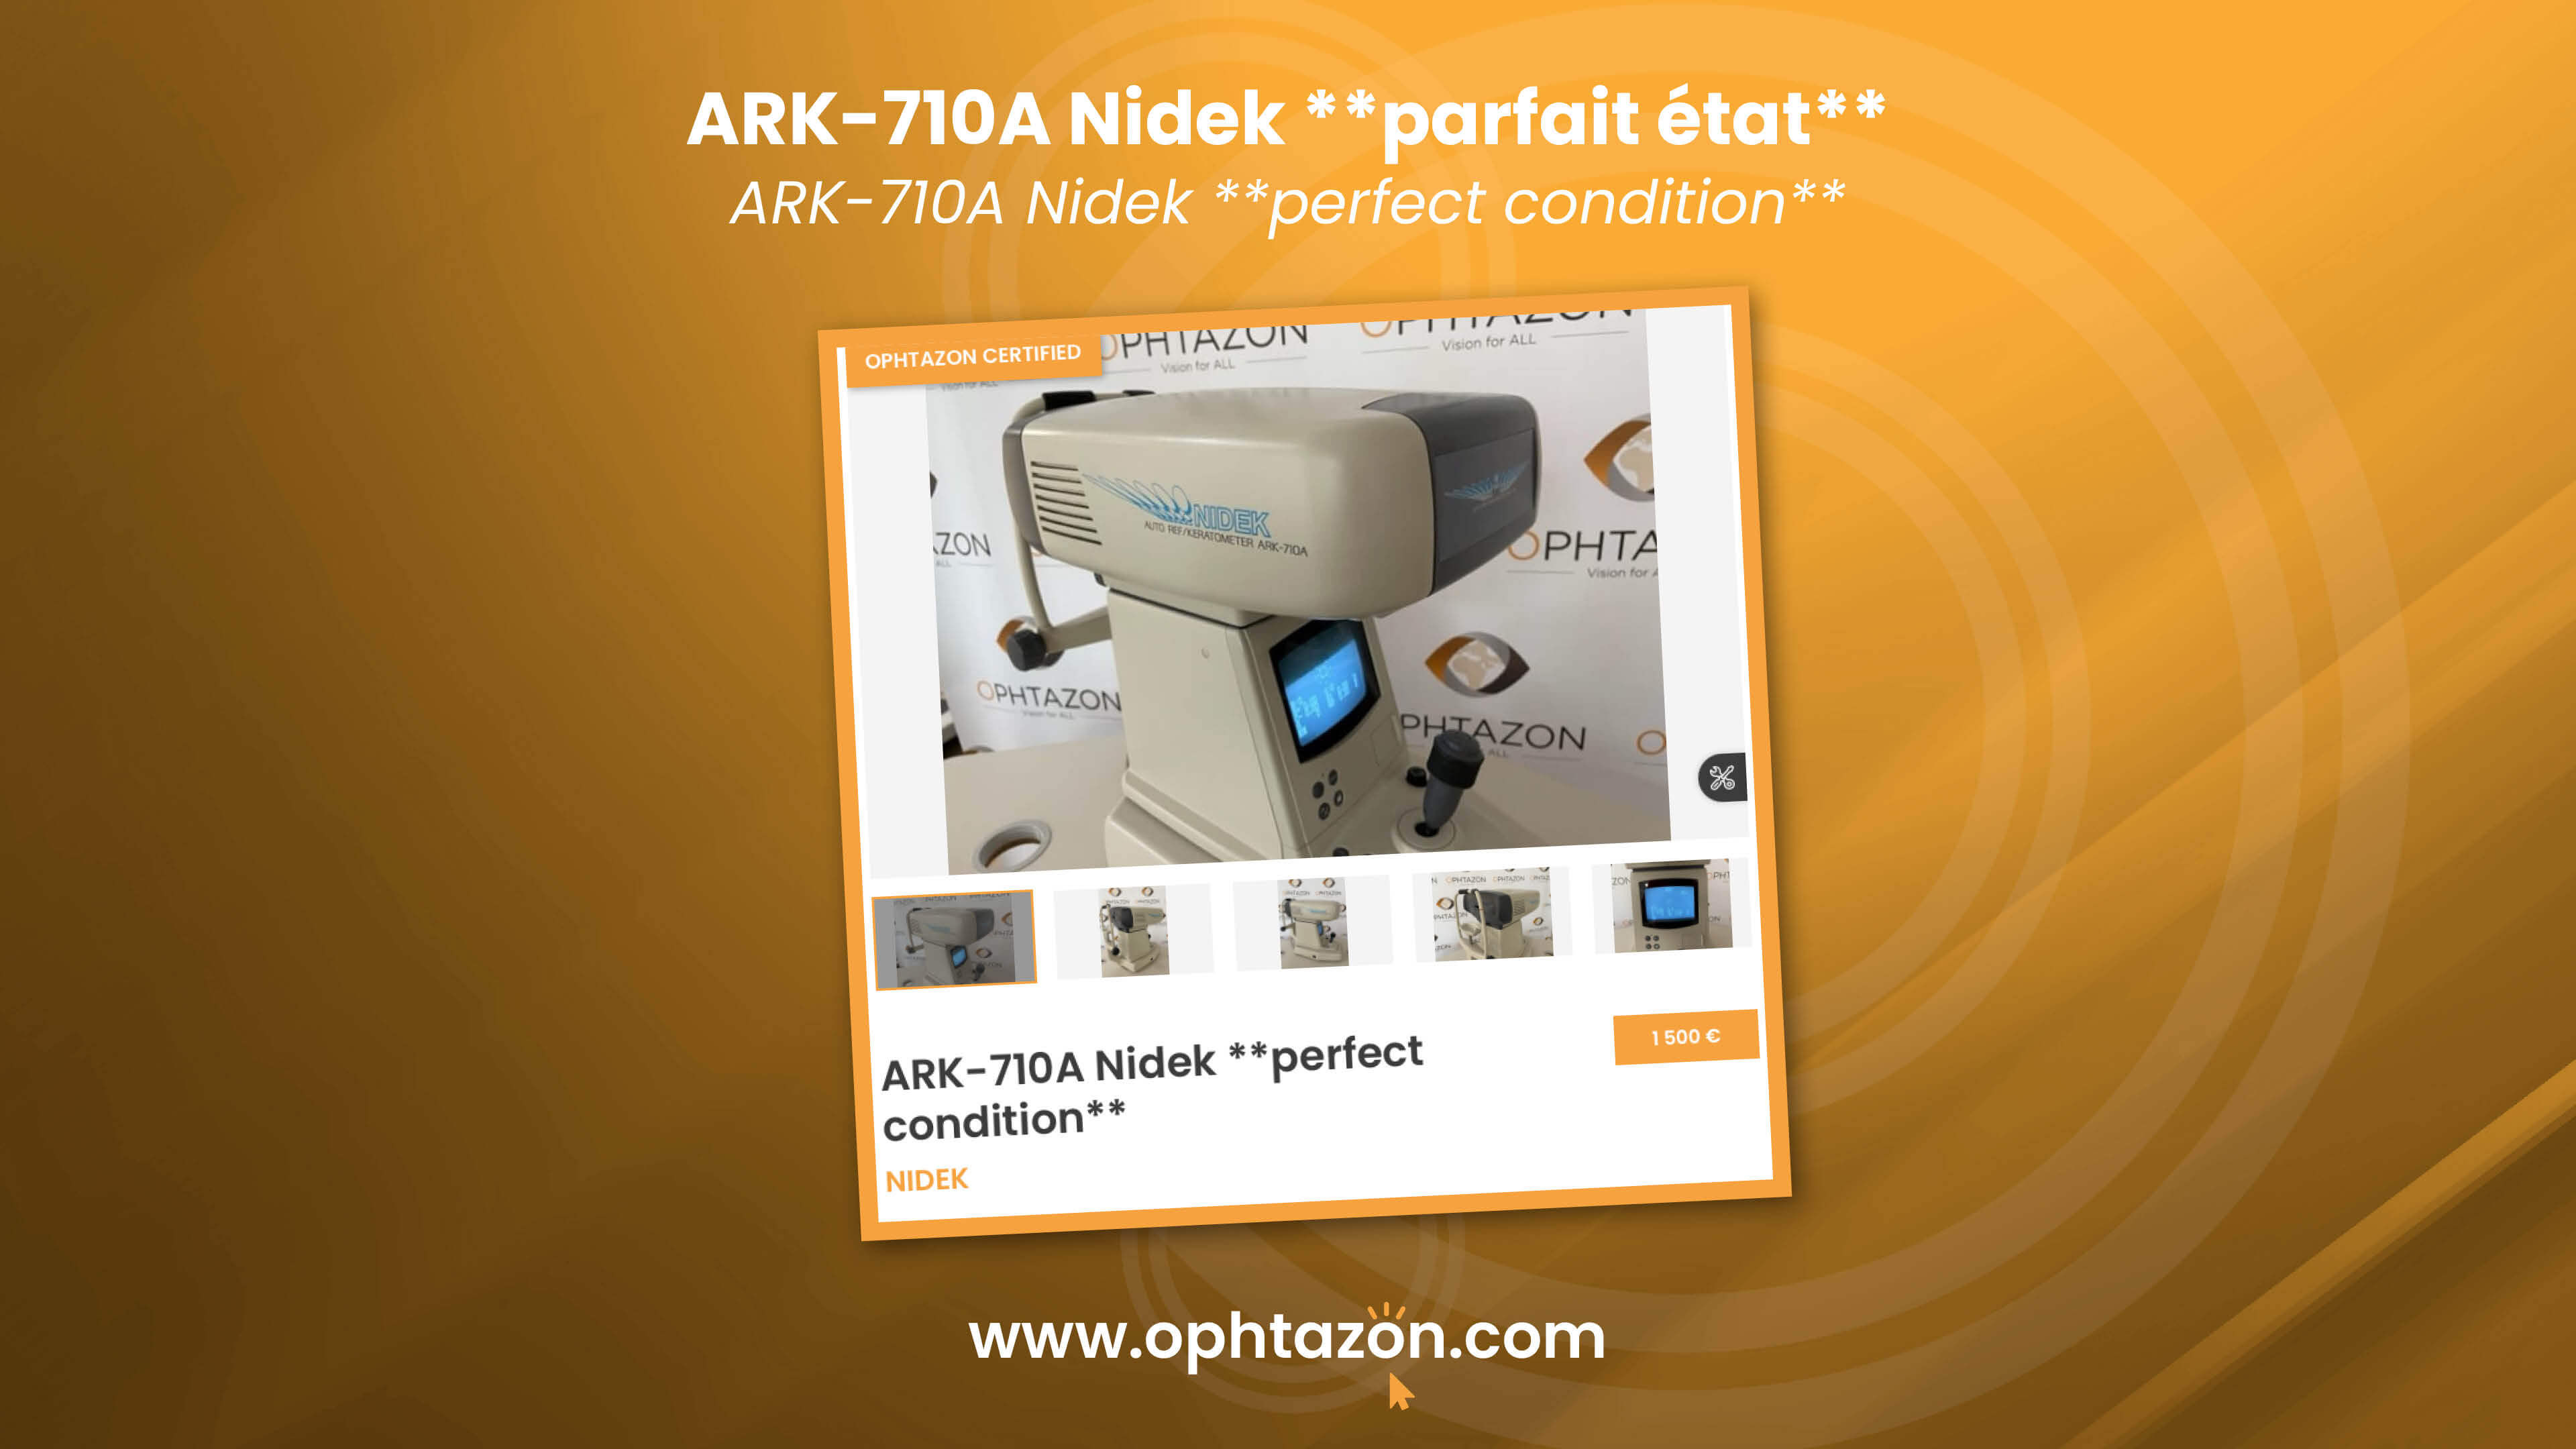 ARK-710A Nidek **perfect condition** est disponible !